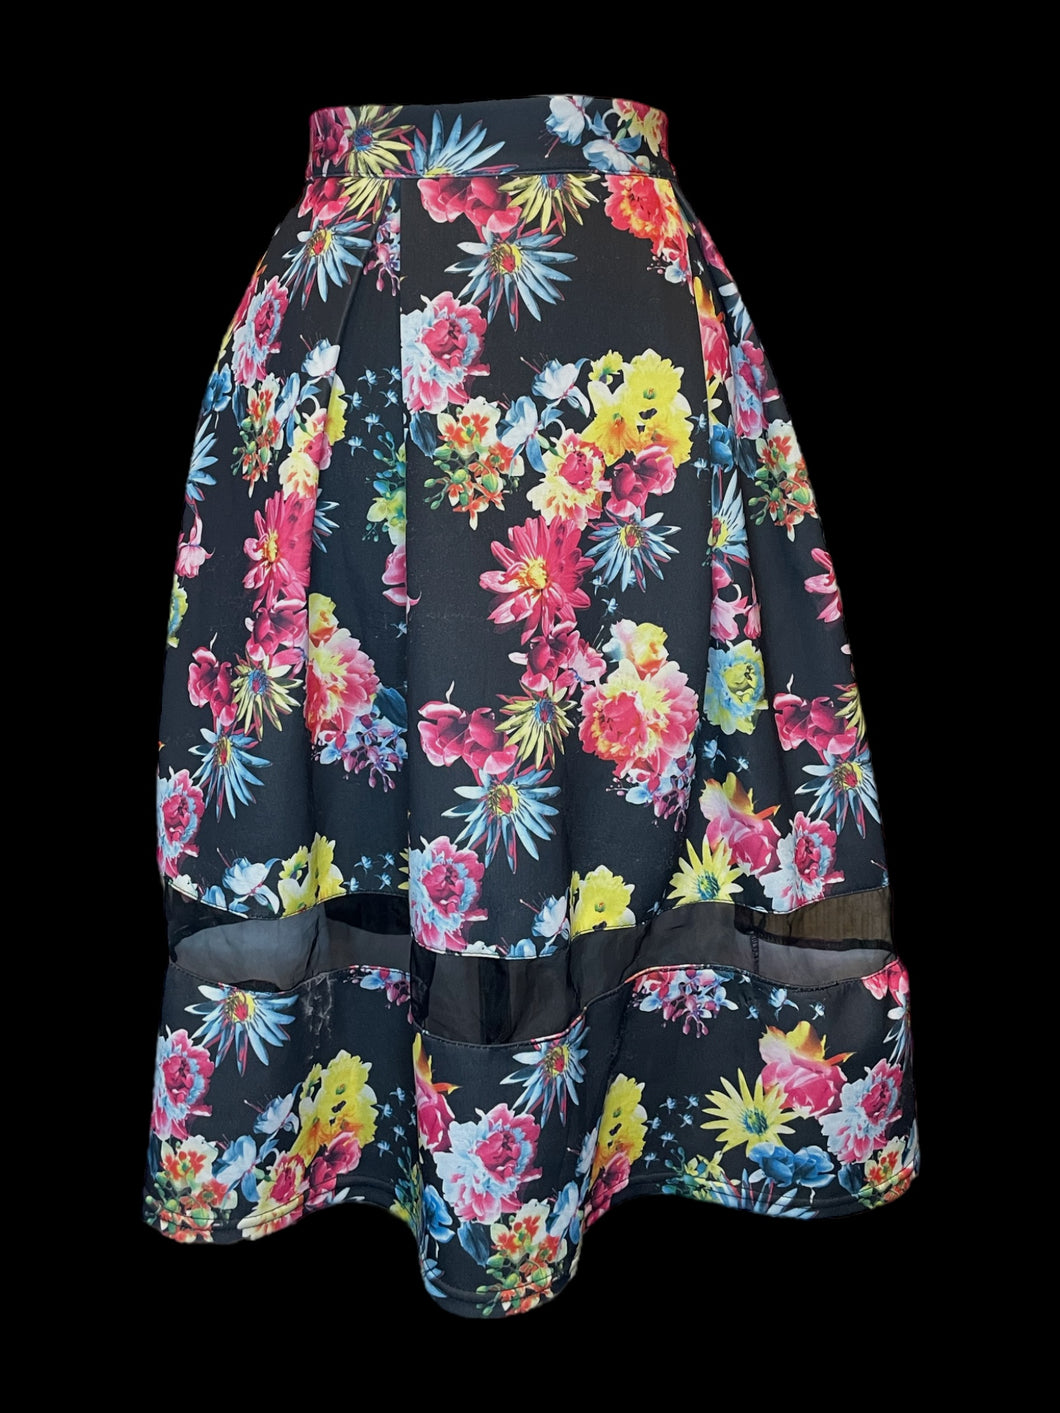 0X Black & bright multicolor floral pleated skirt w/ mesh cutout, & clasp/zipper closure